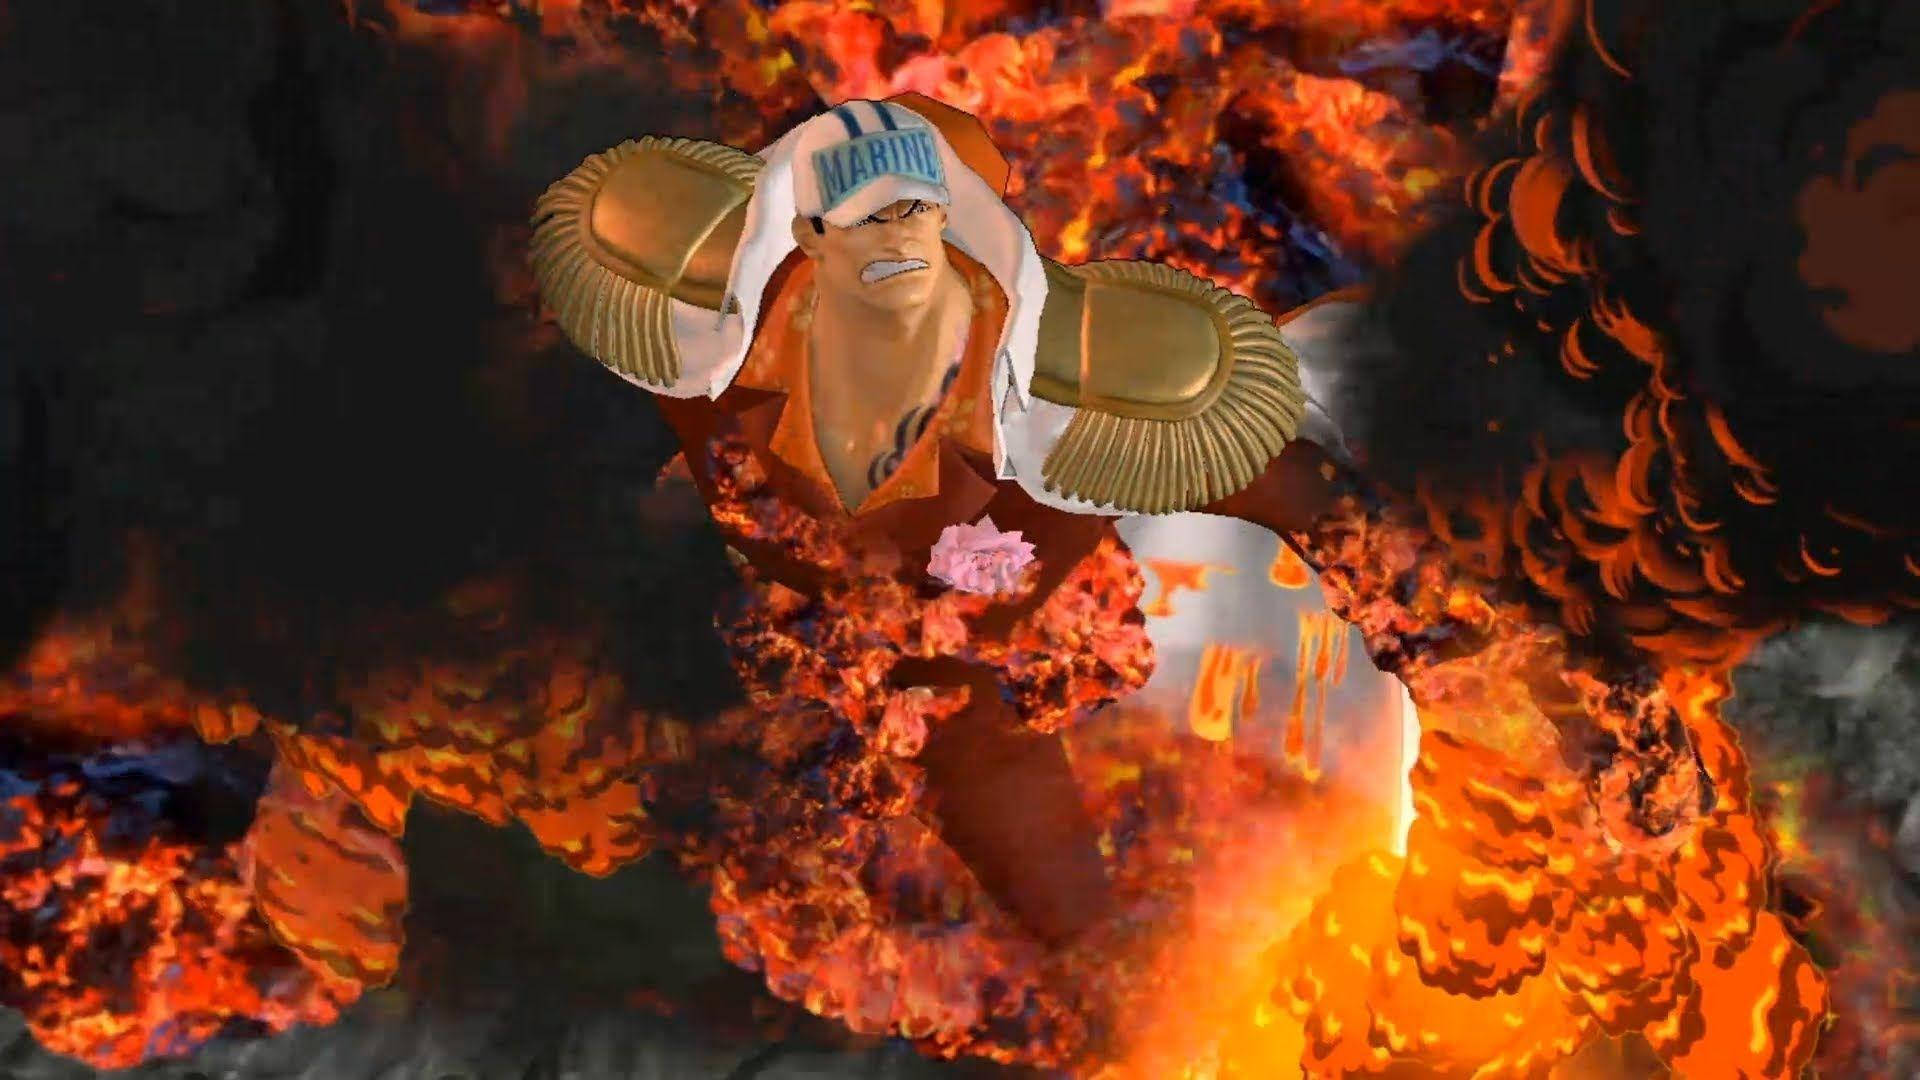 Akainu Raging Flames Background